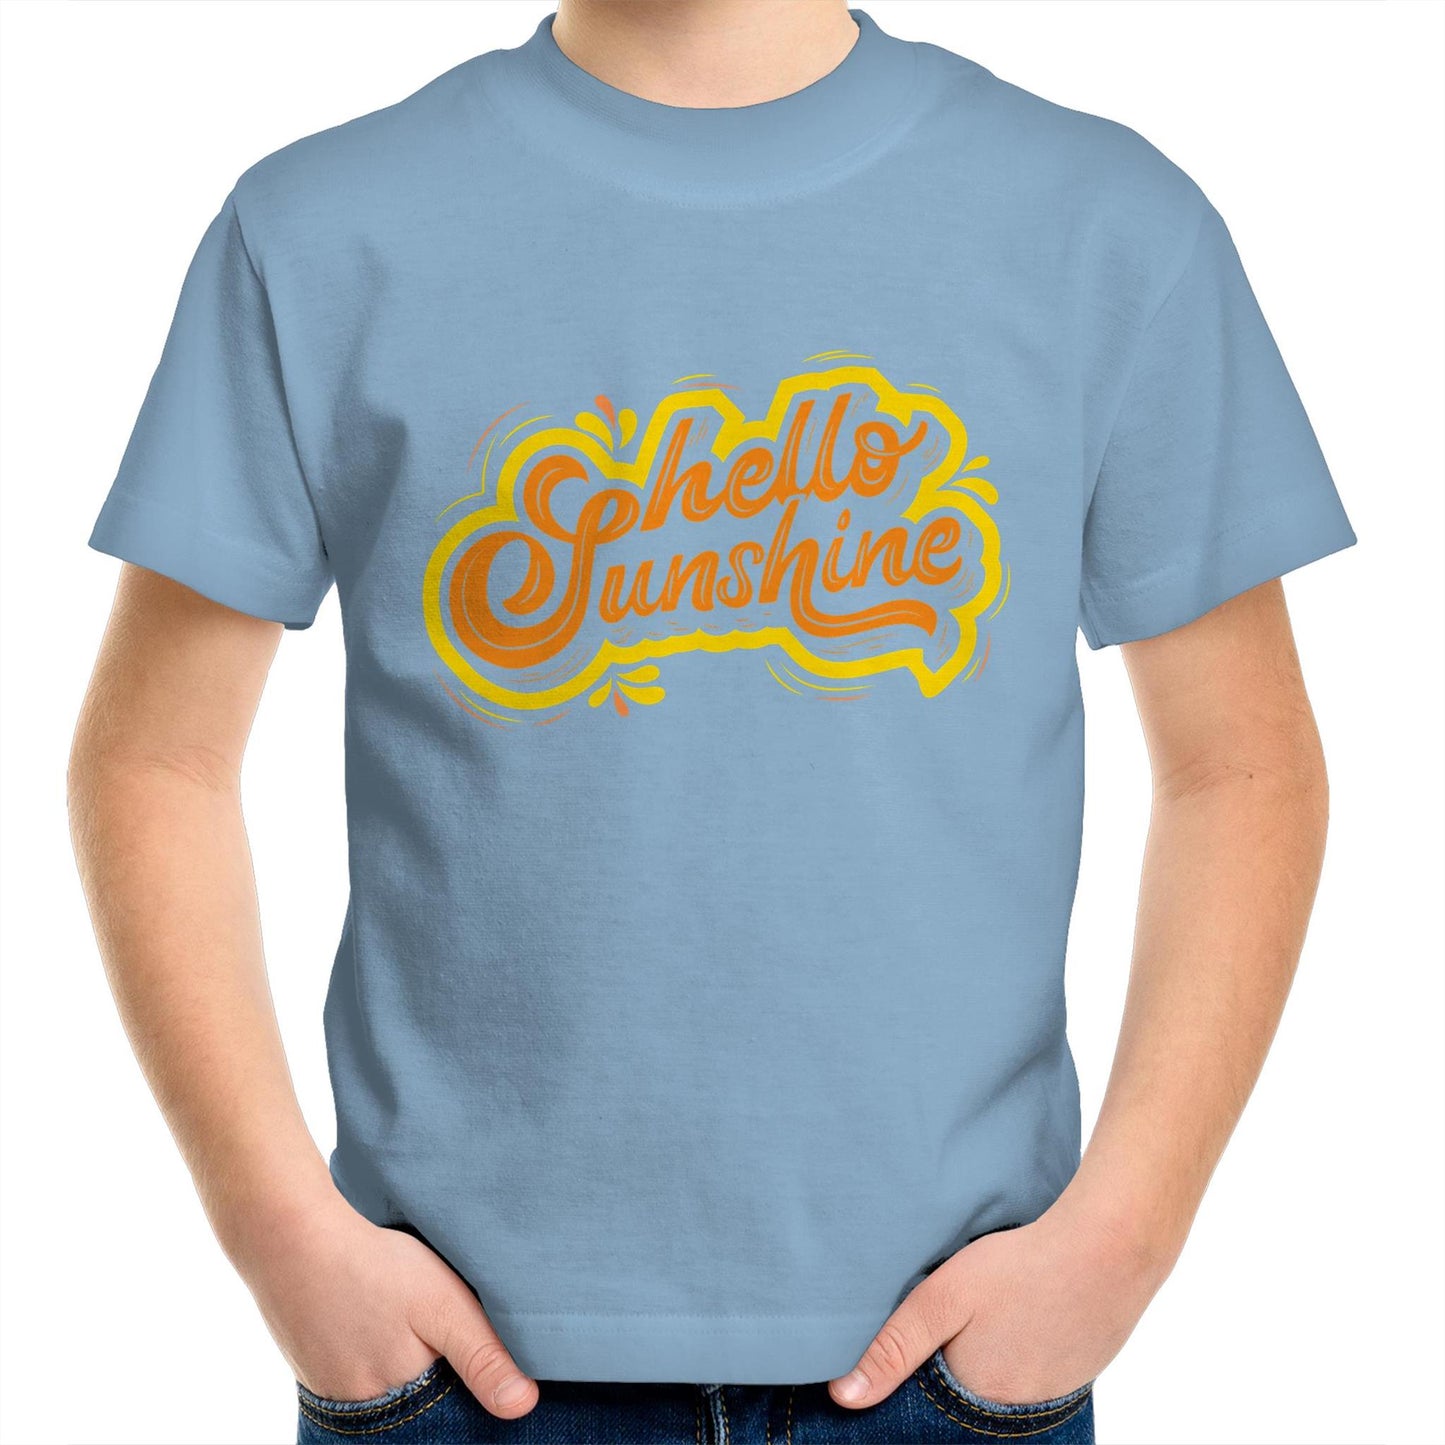 Hello Sunshine - Kids Youth Crew T-Shirt Carolina Blue Kids Youth T-shirt Summer